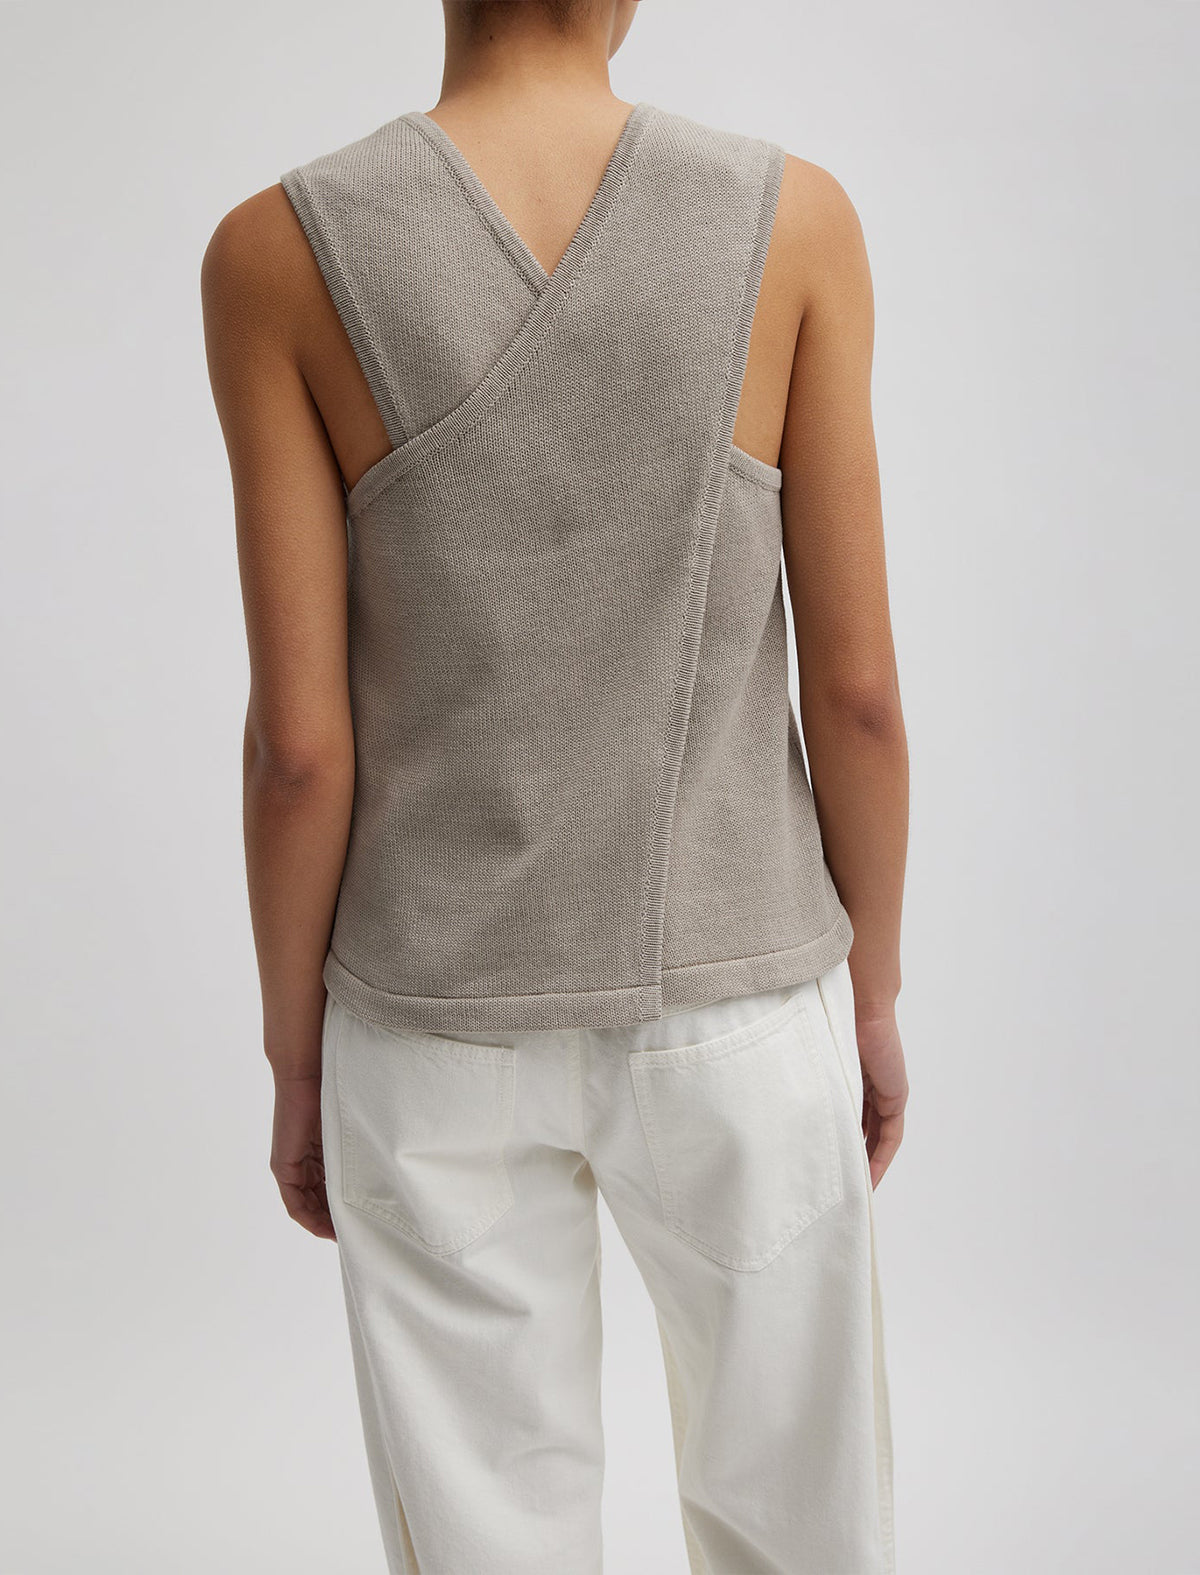 TIBI Cotton Criss Cross Sleeveless Sweater In Light Stone